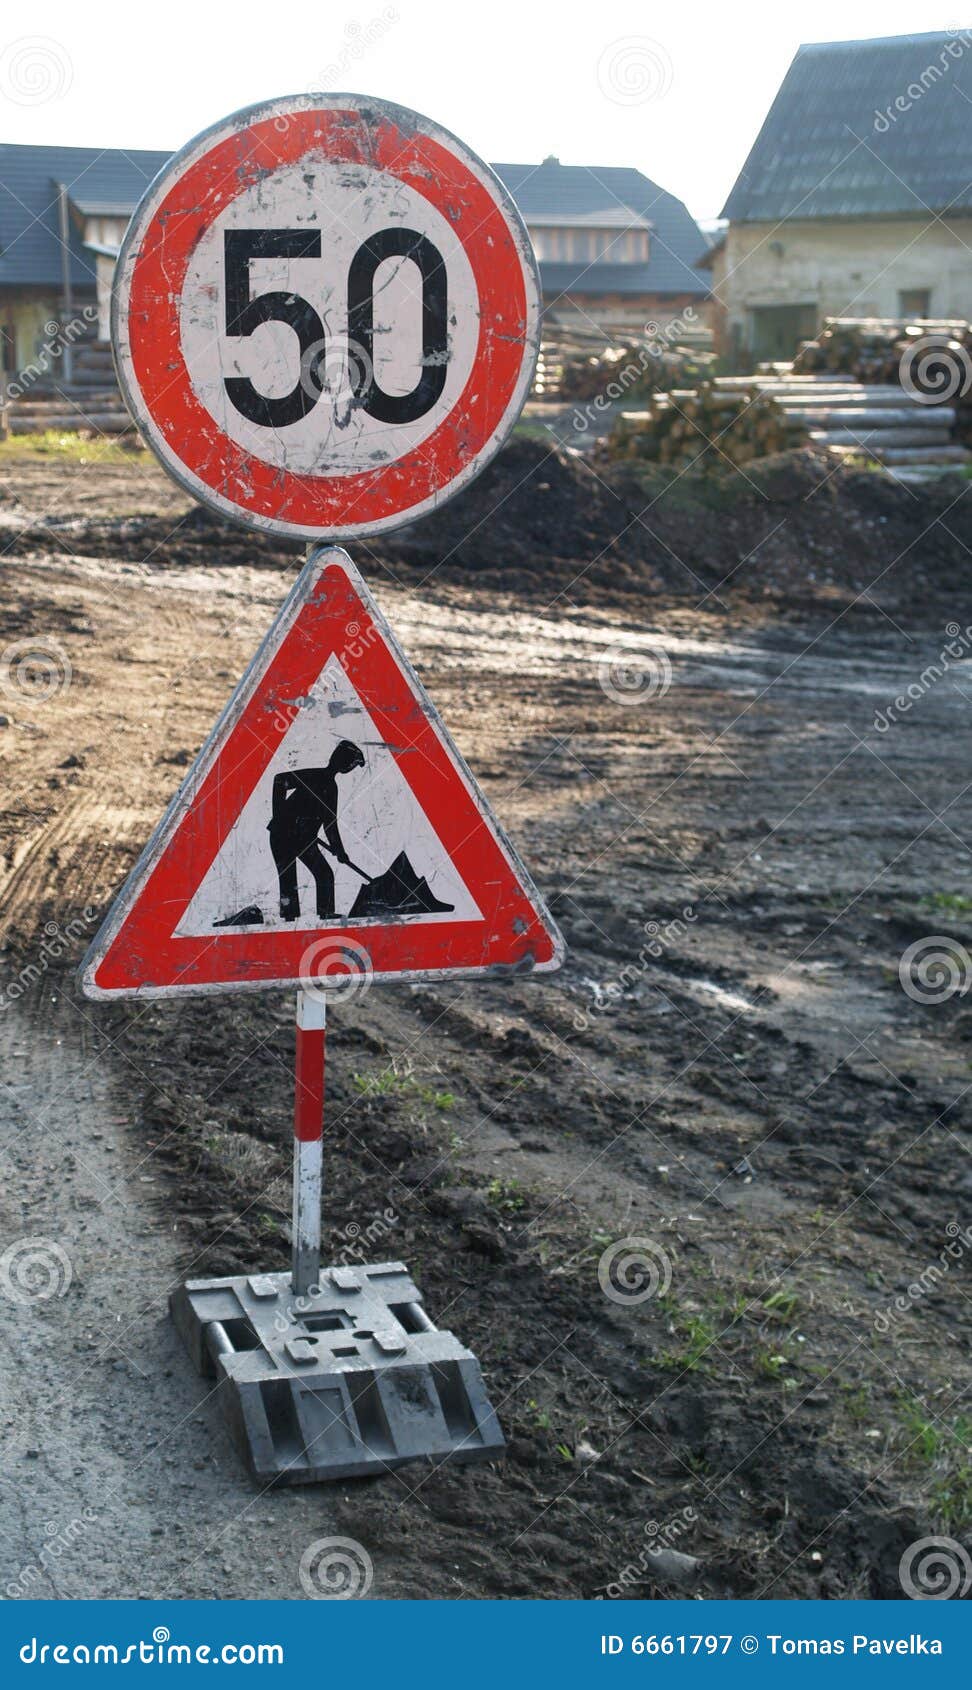 roadwork and slowdown sign